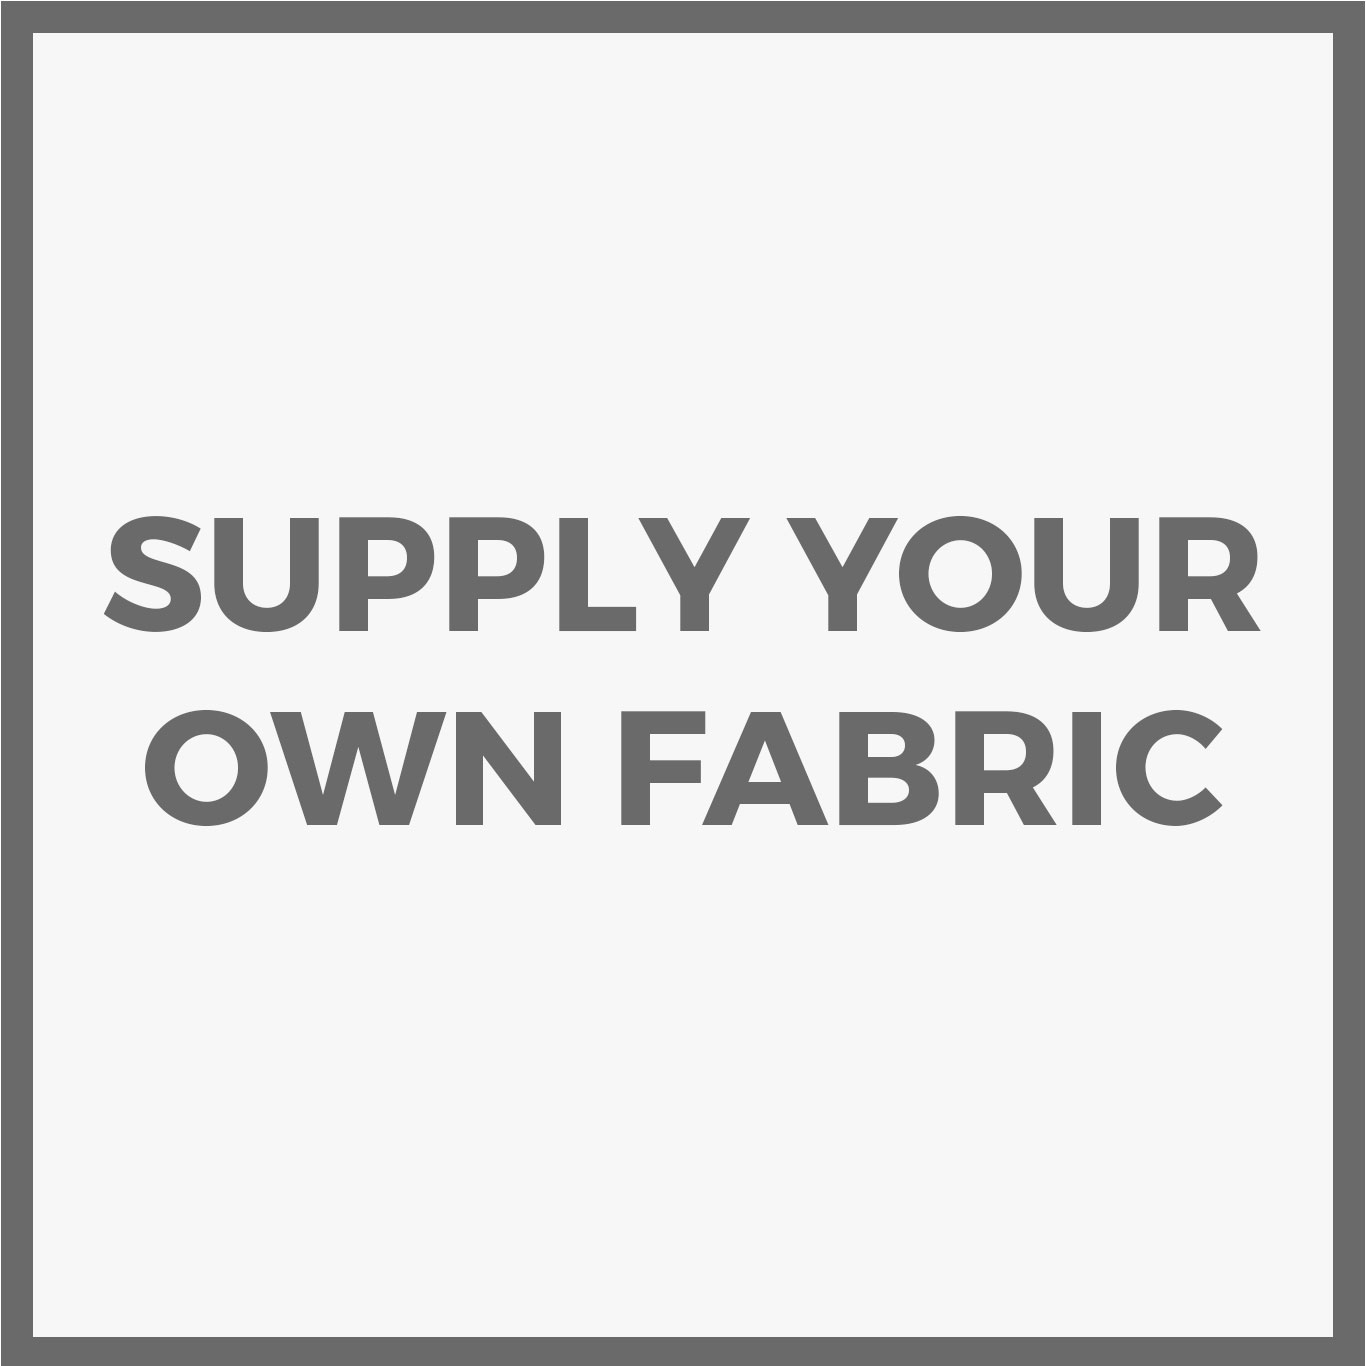 Customers Own Fabric